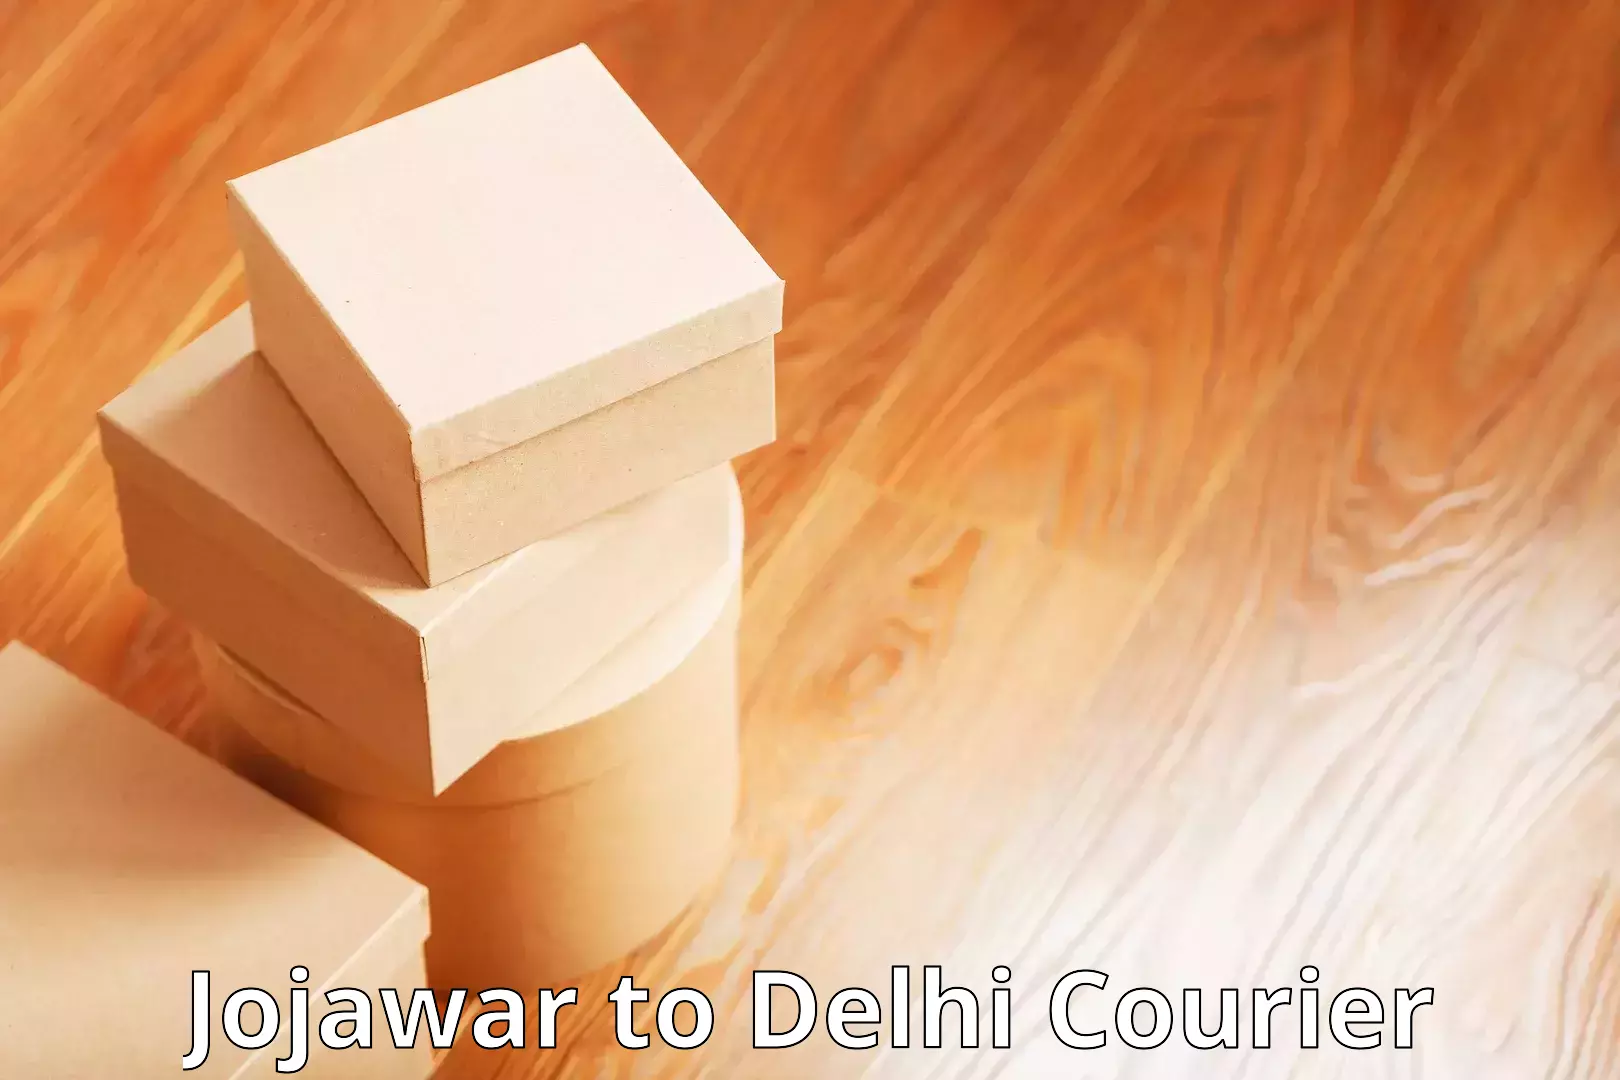 Efficient order fulfillment Jojawar to Delhi